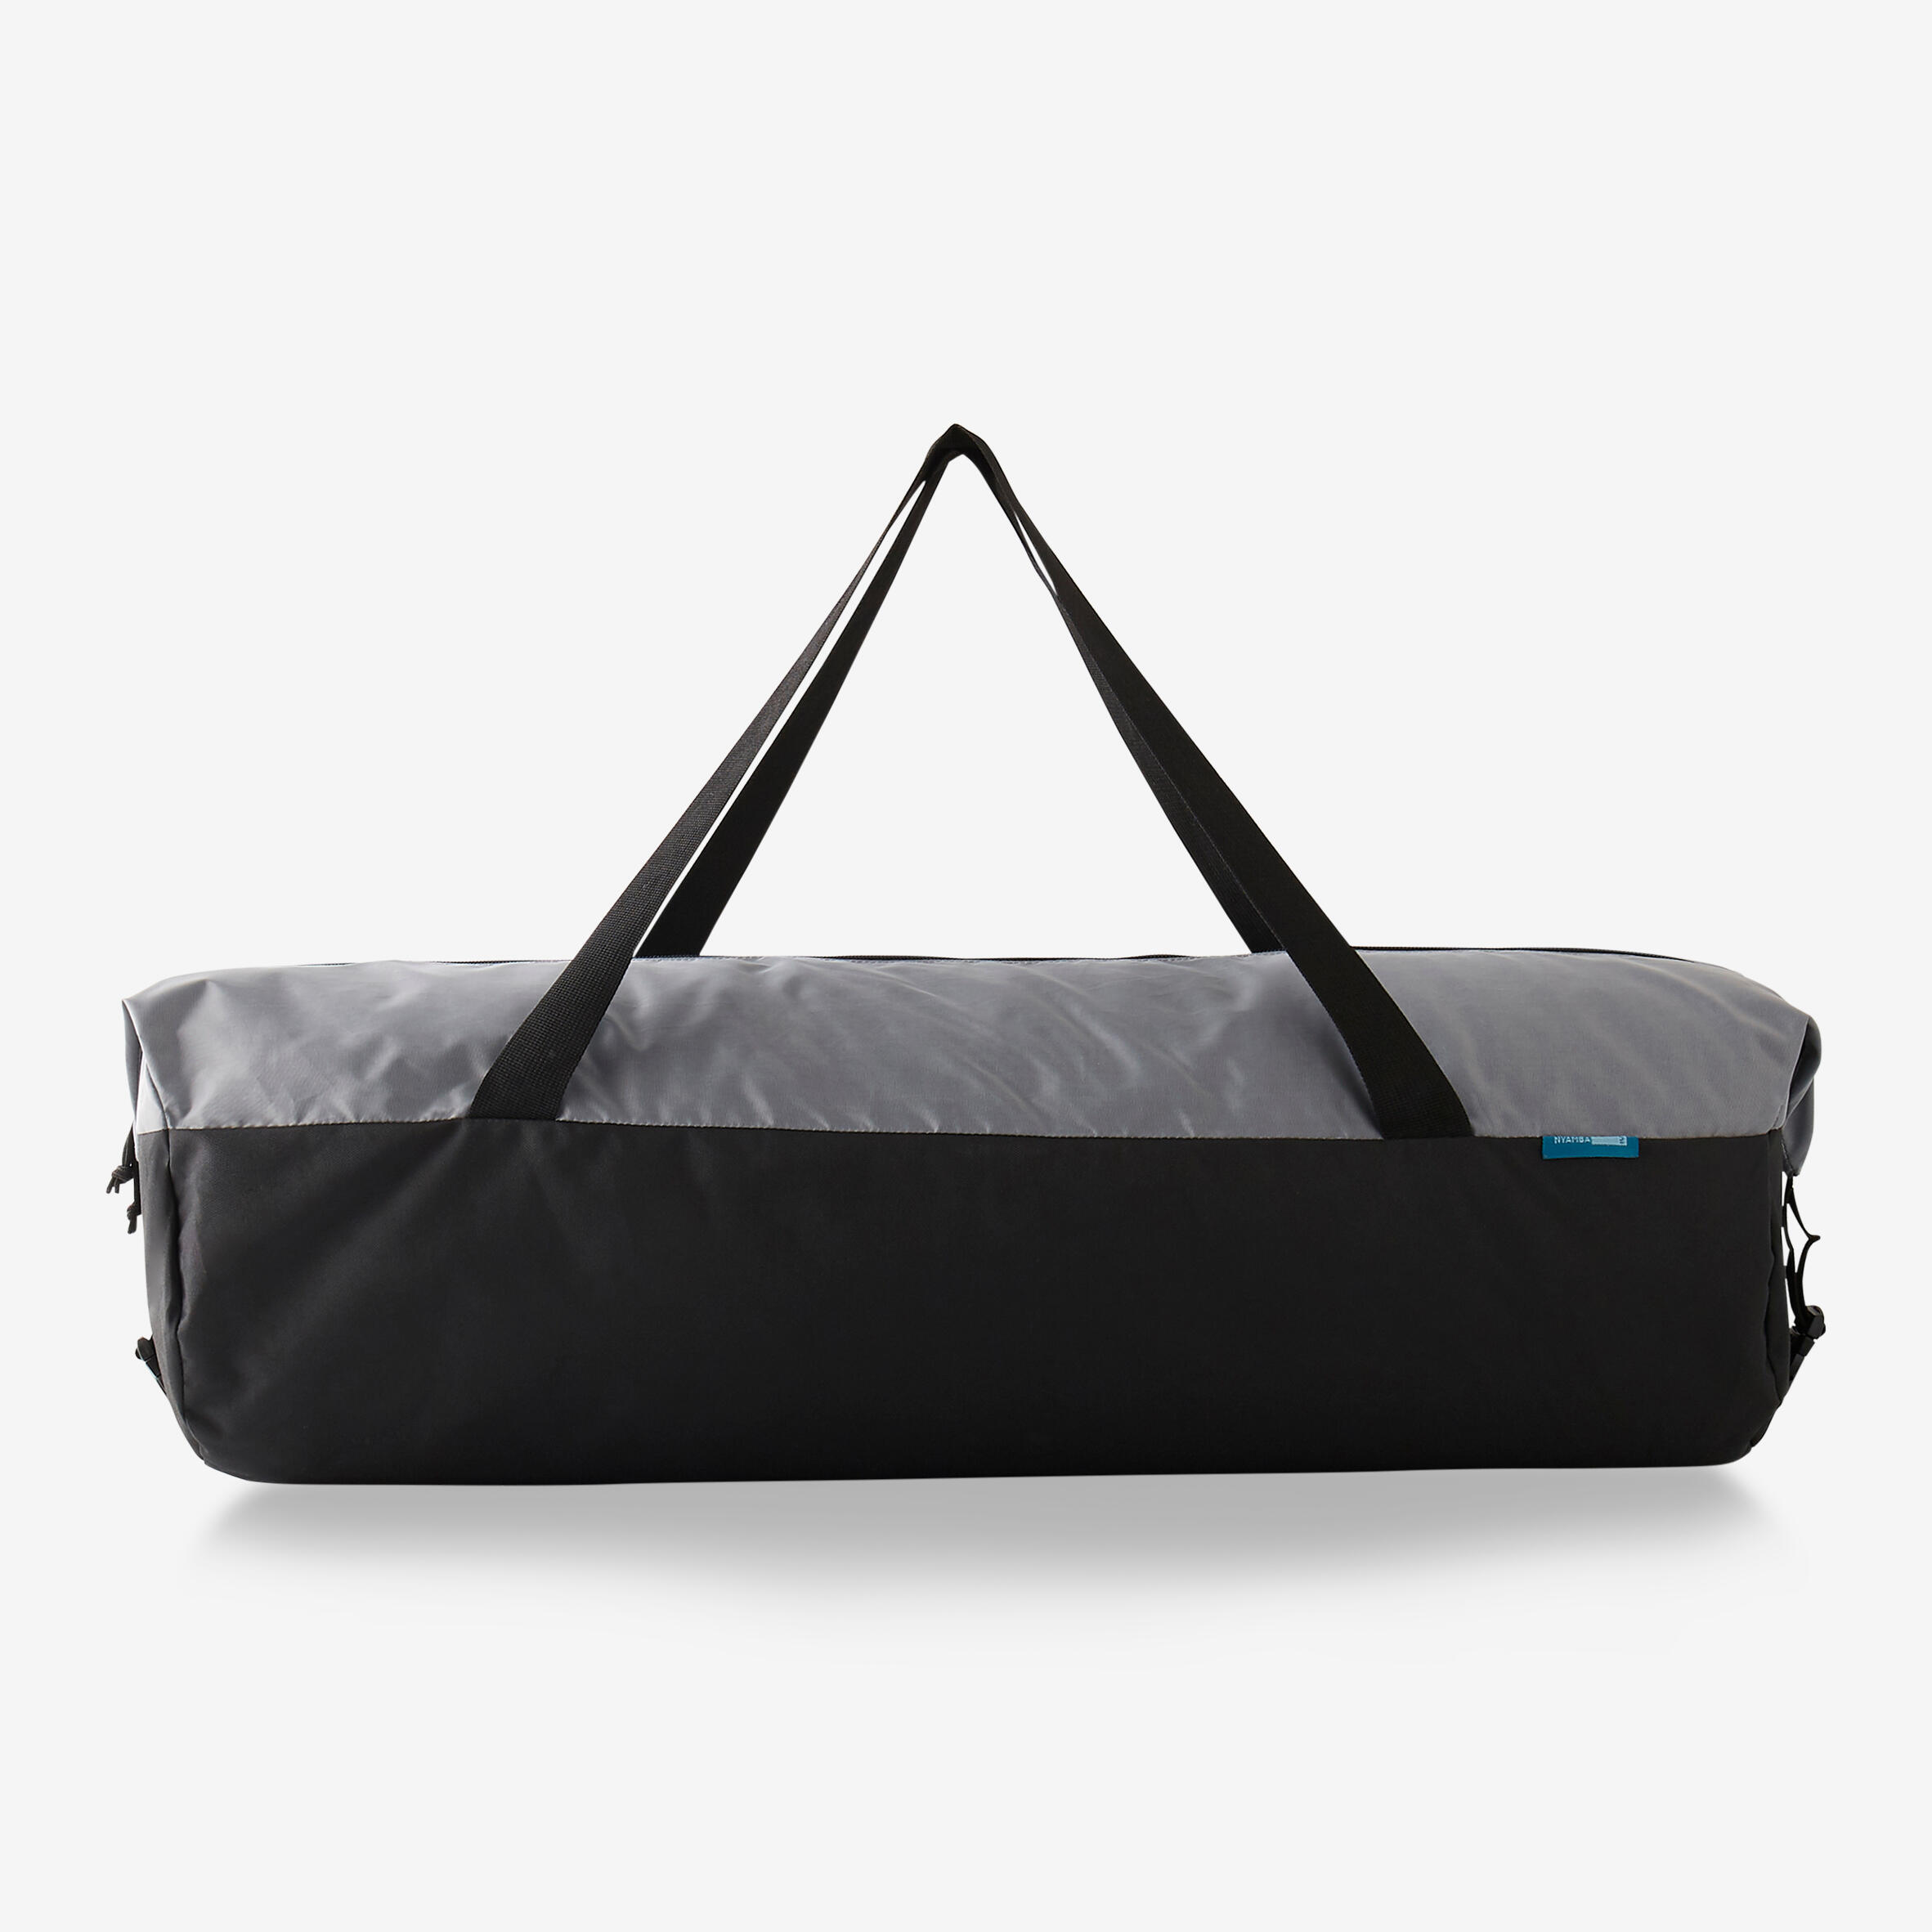 Phatmat Carry Bag - Yoga Bag - Pilates Bag - Buy Online - Phatmats